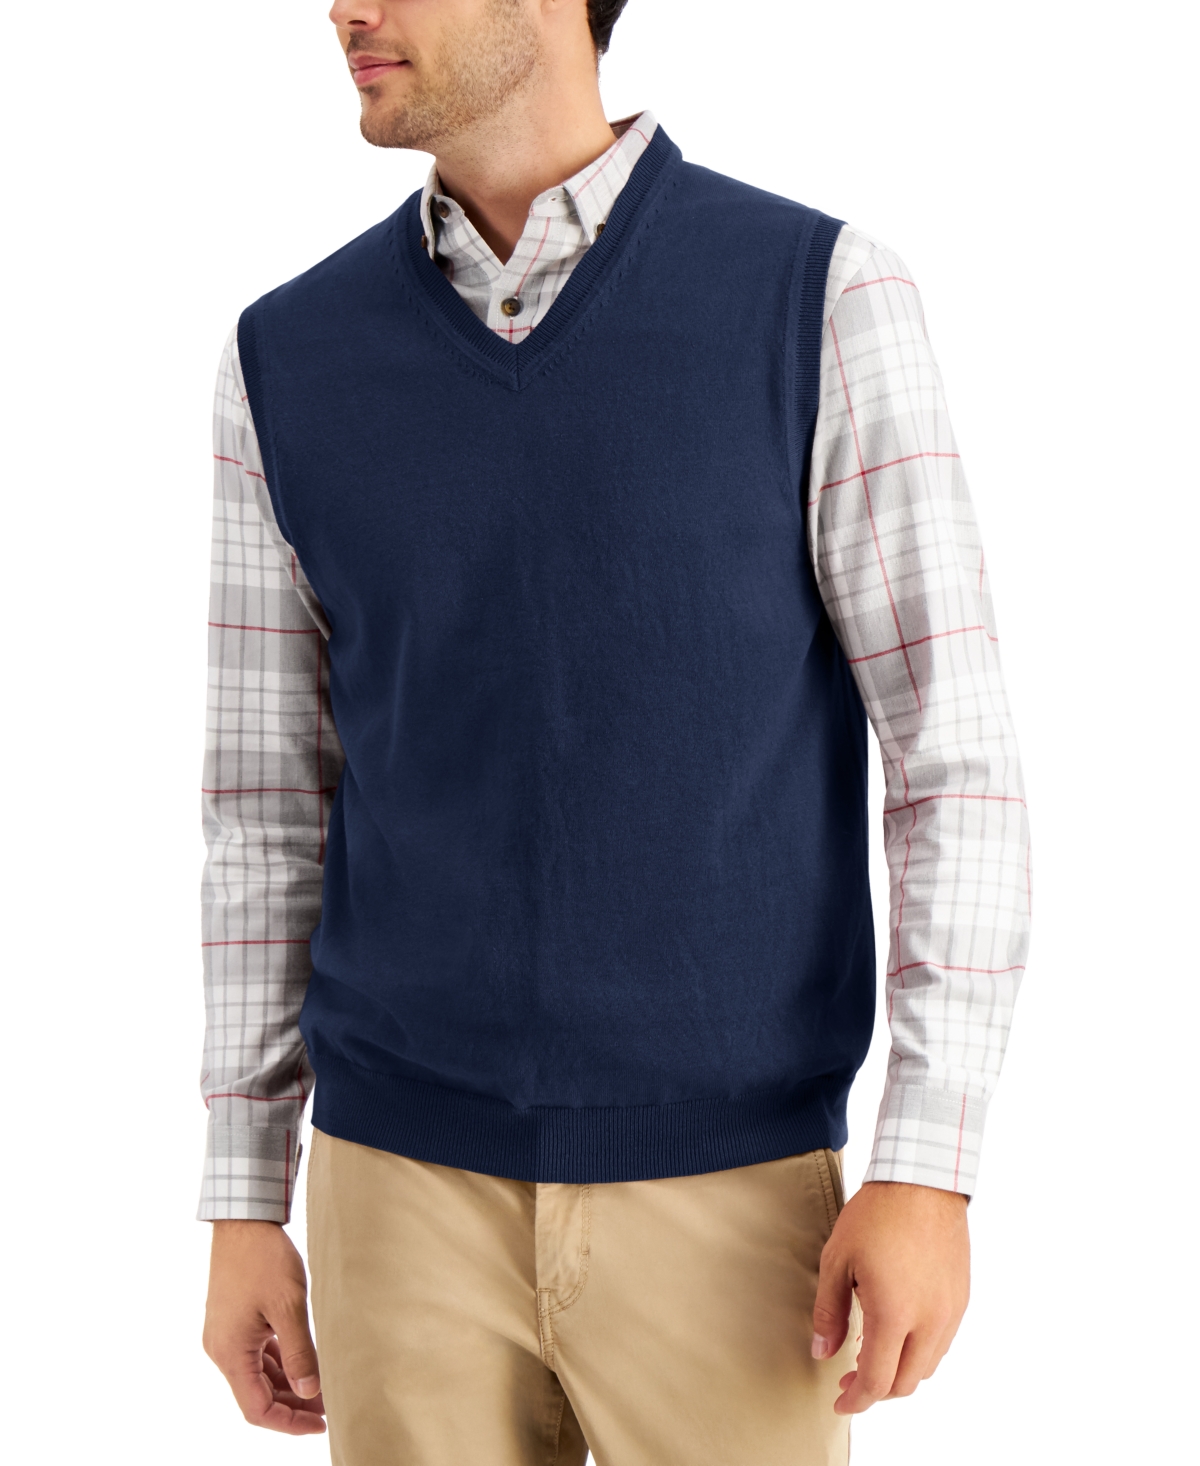 Men's Solid V-Neck Sweater Vest, Created for Macy's - Navy Blue